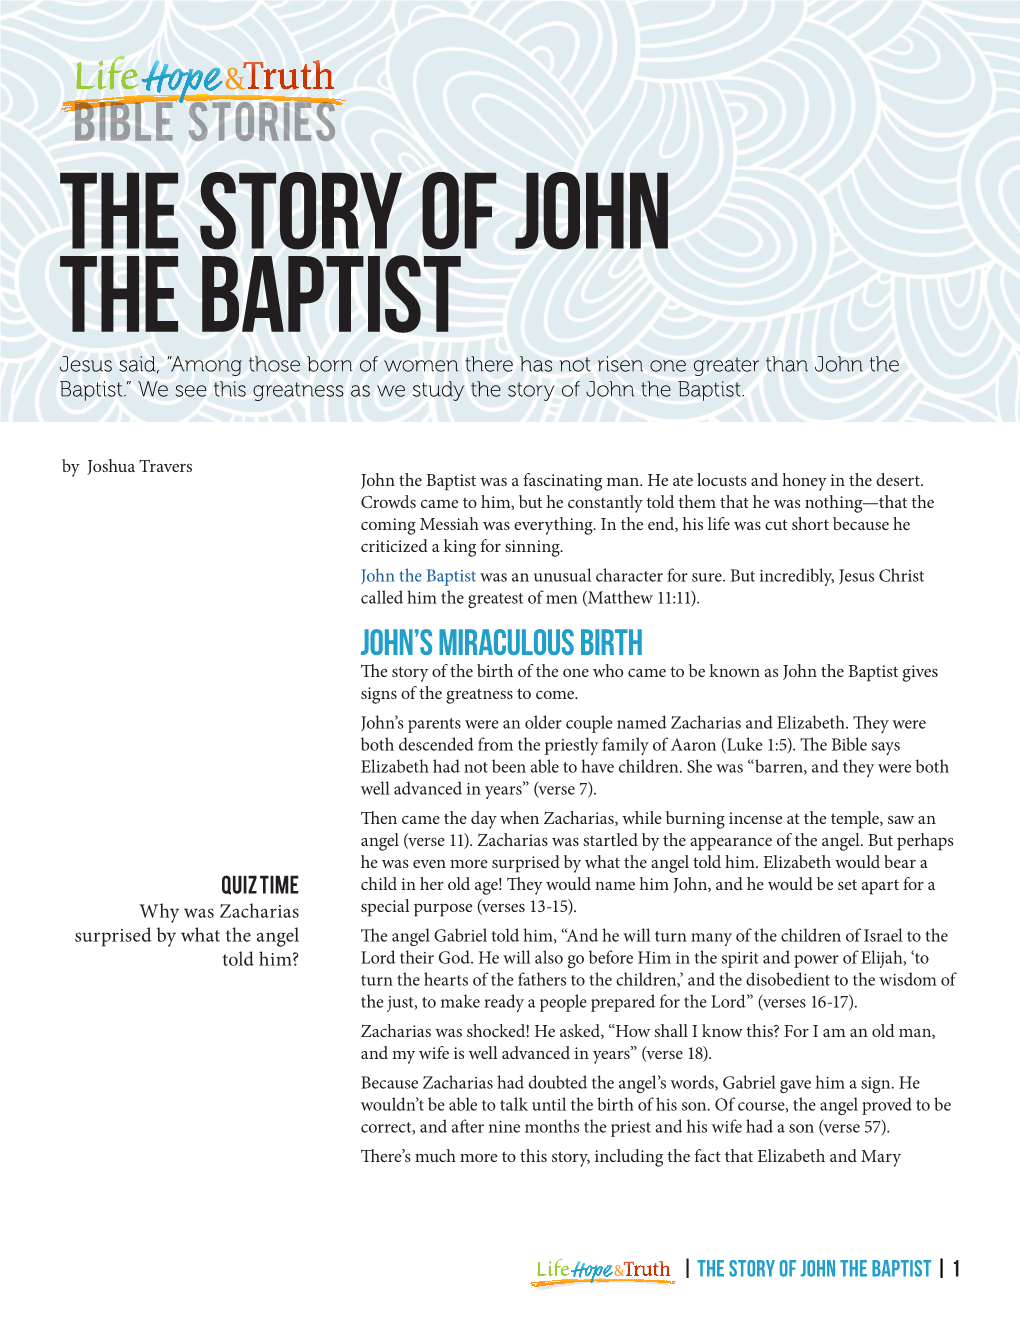 The Story of John the Baptist